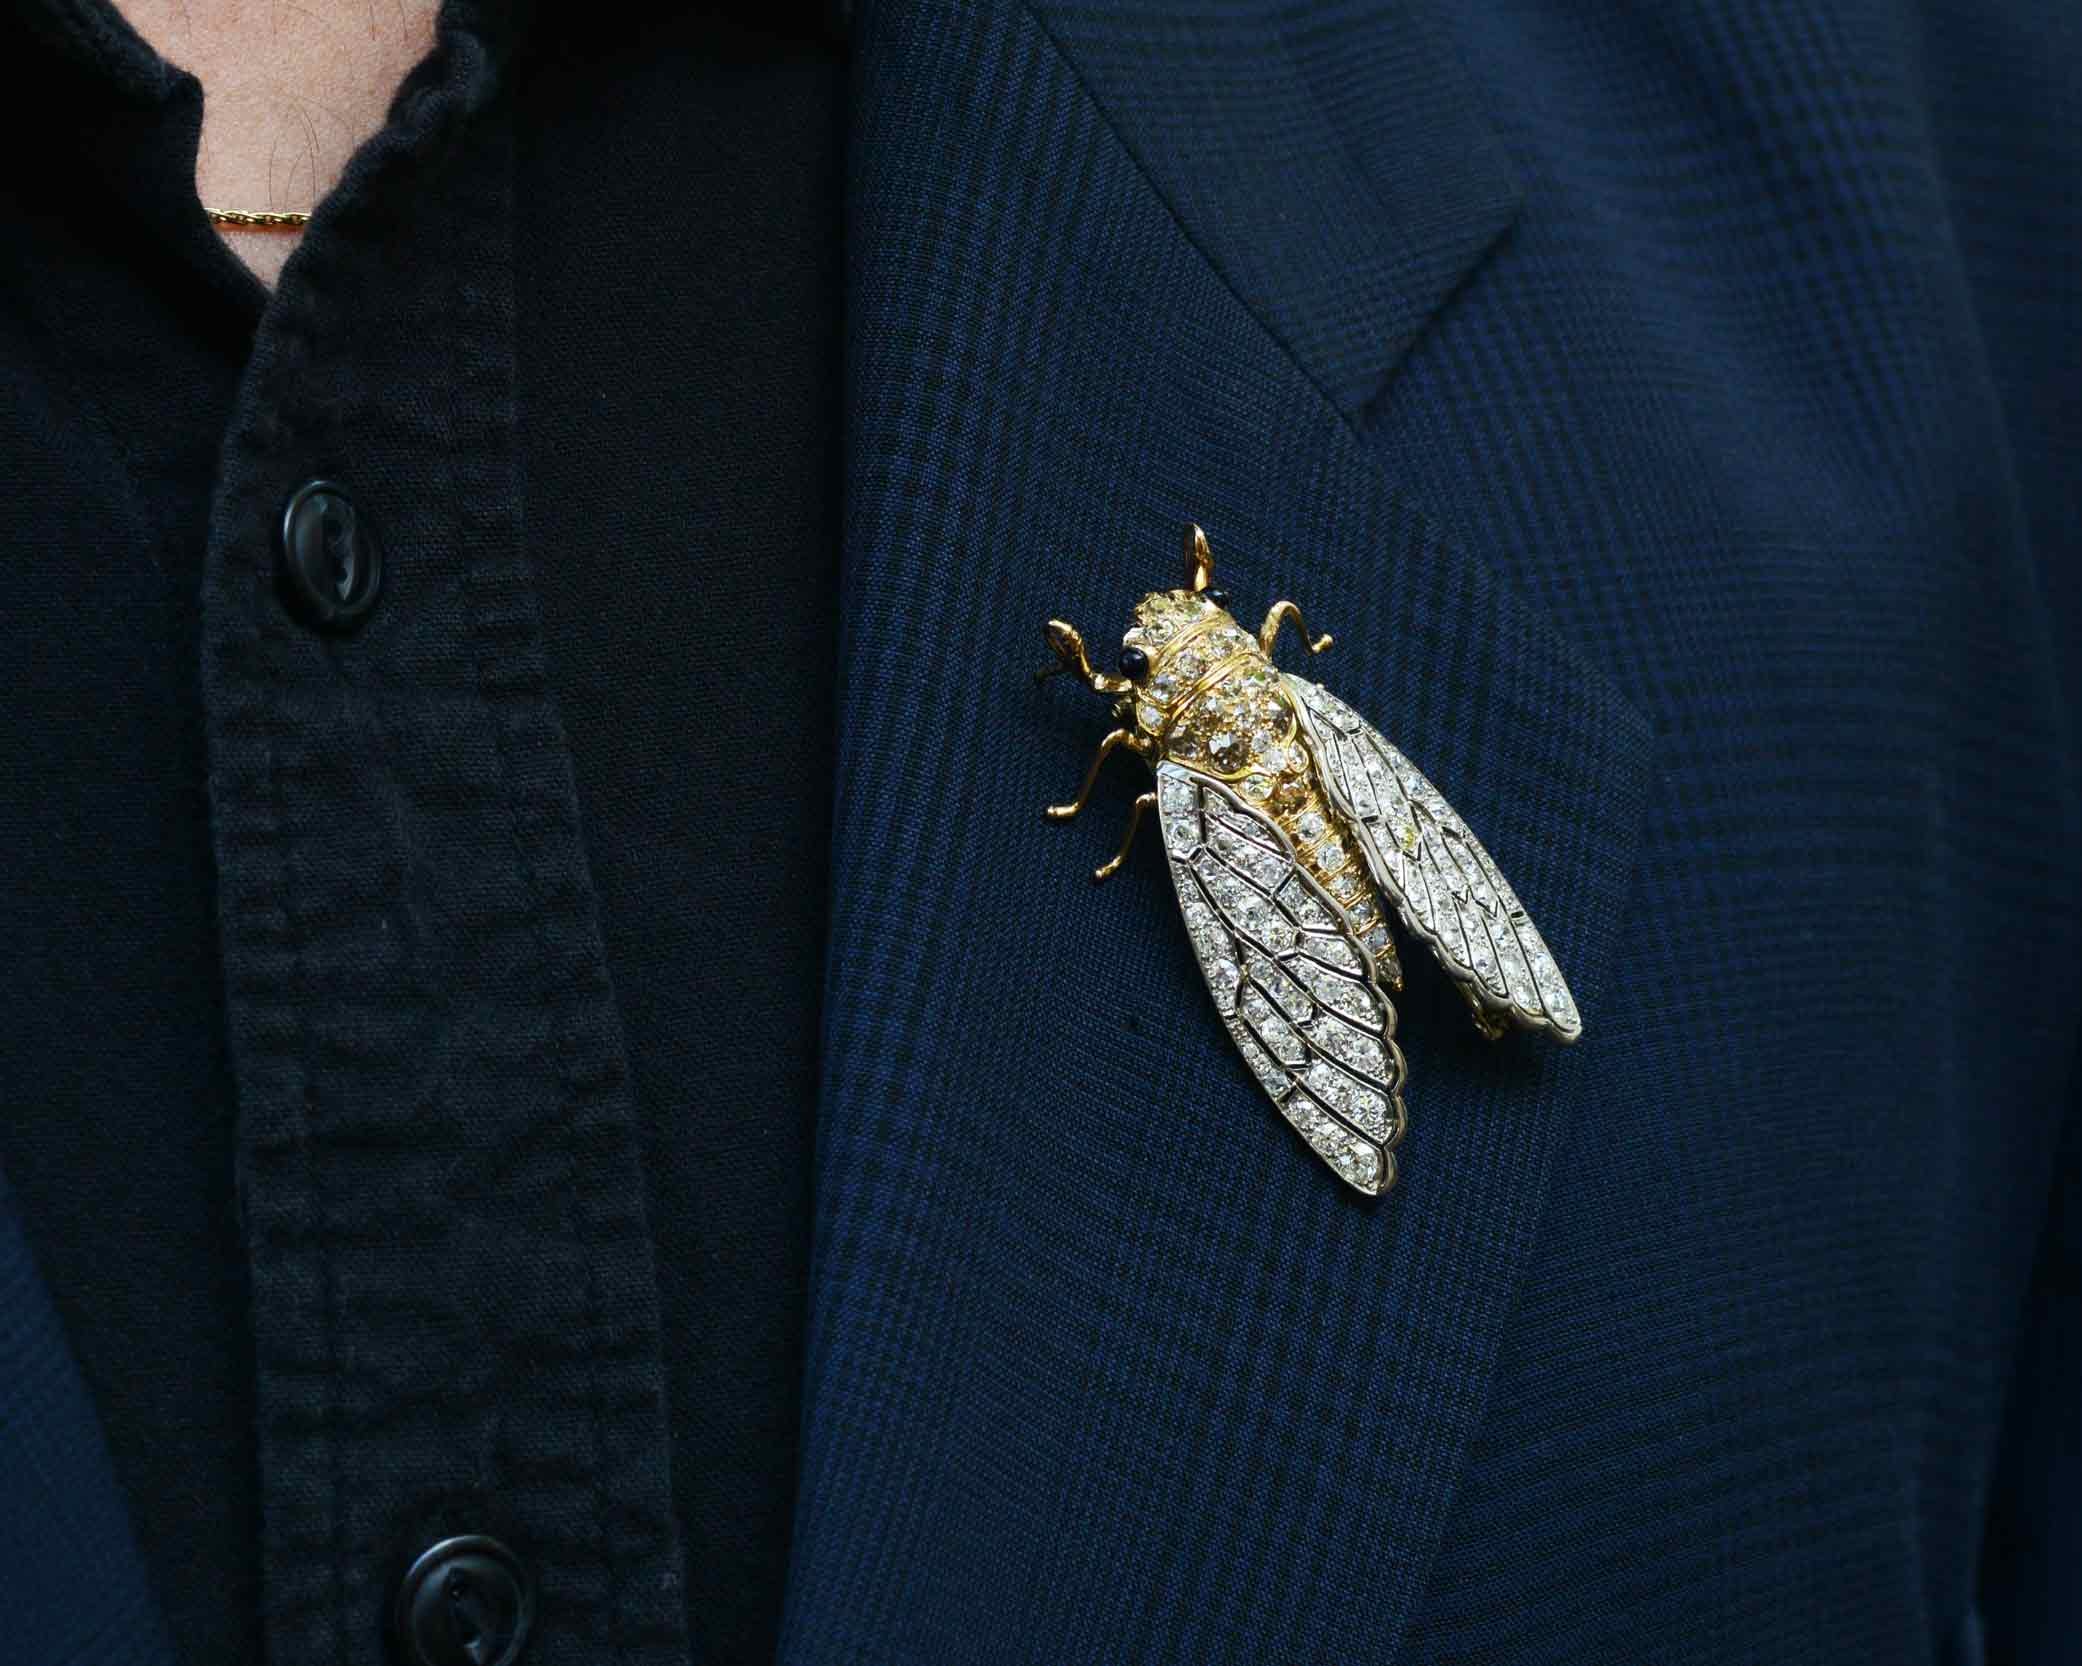 Interesting Insect Cicada Diamond Brooch Pin